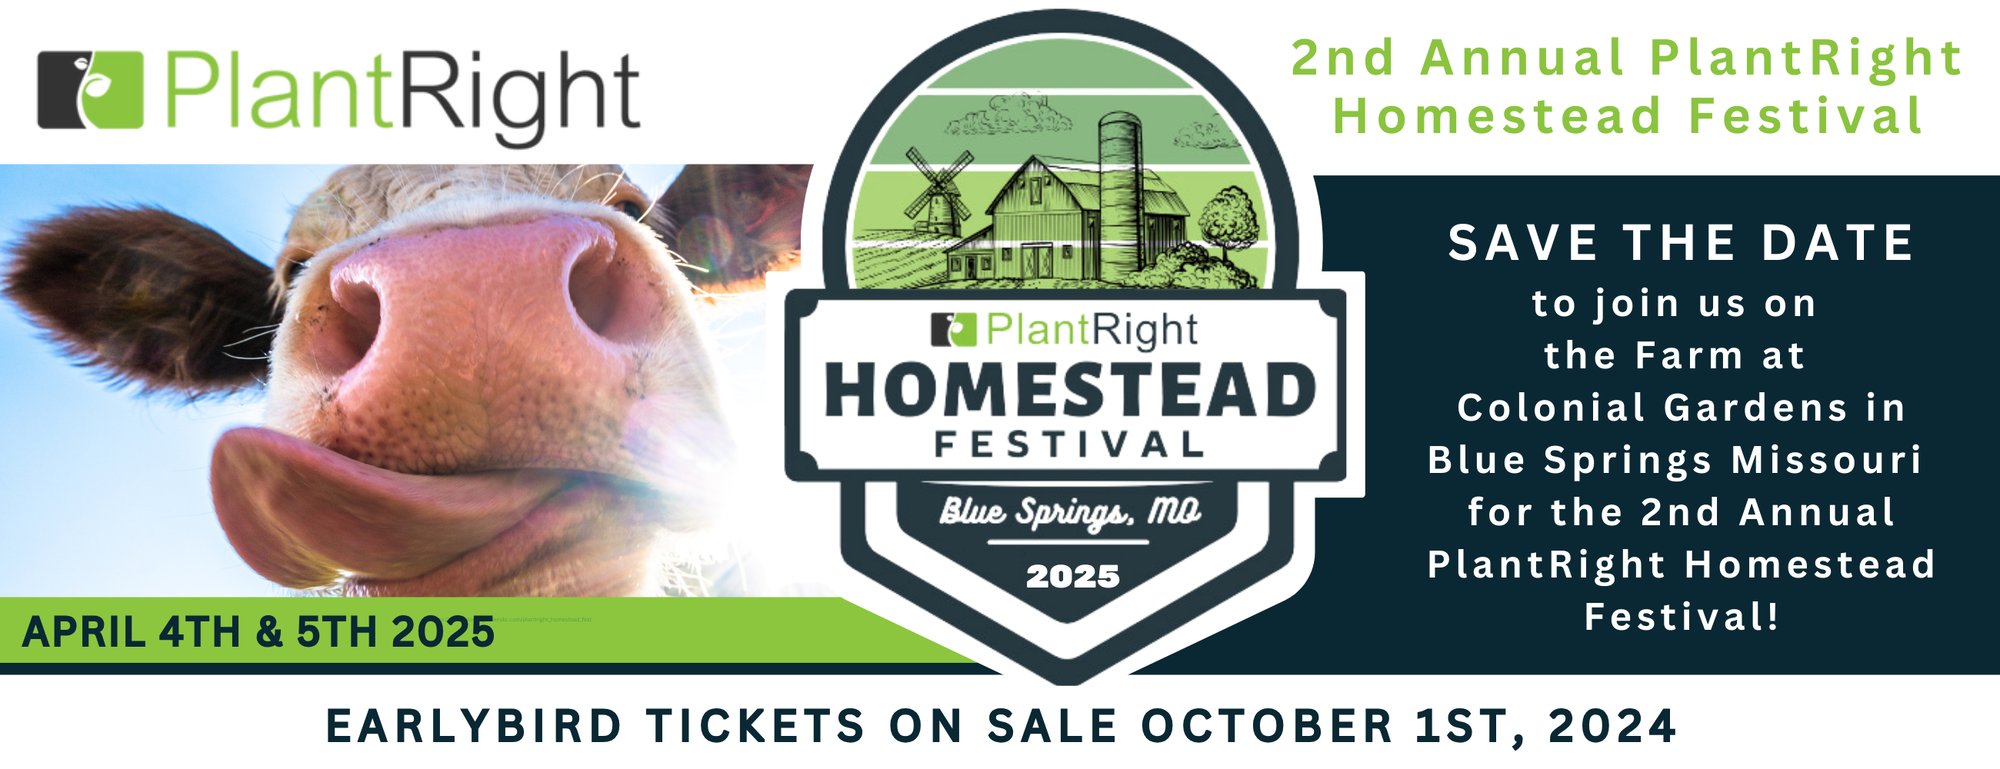 Homestead Fest Webpage Images (2600 x 1000 px)-1